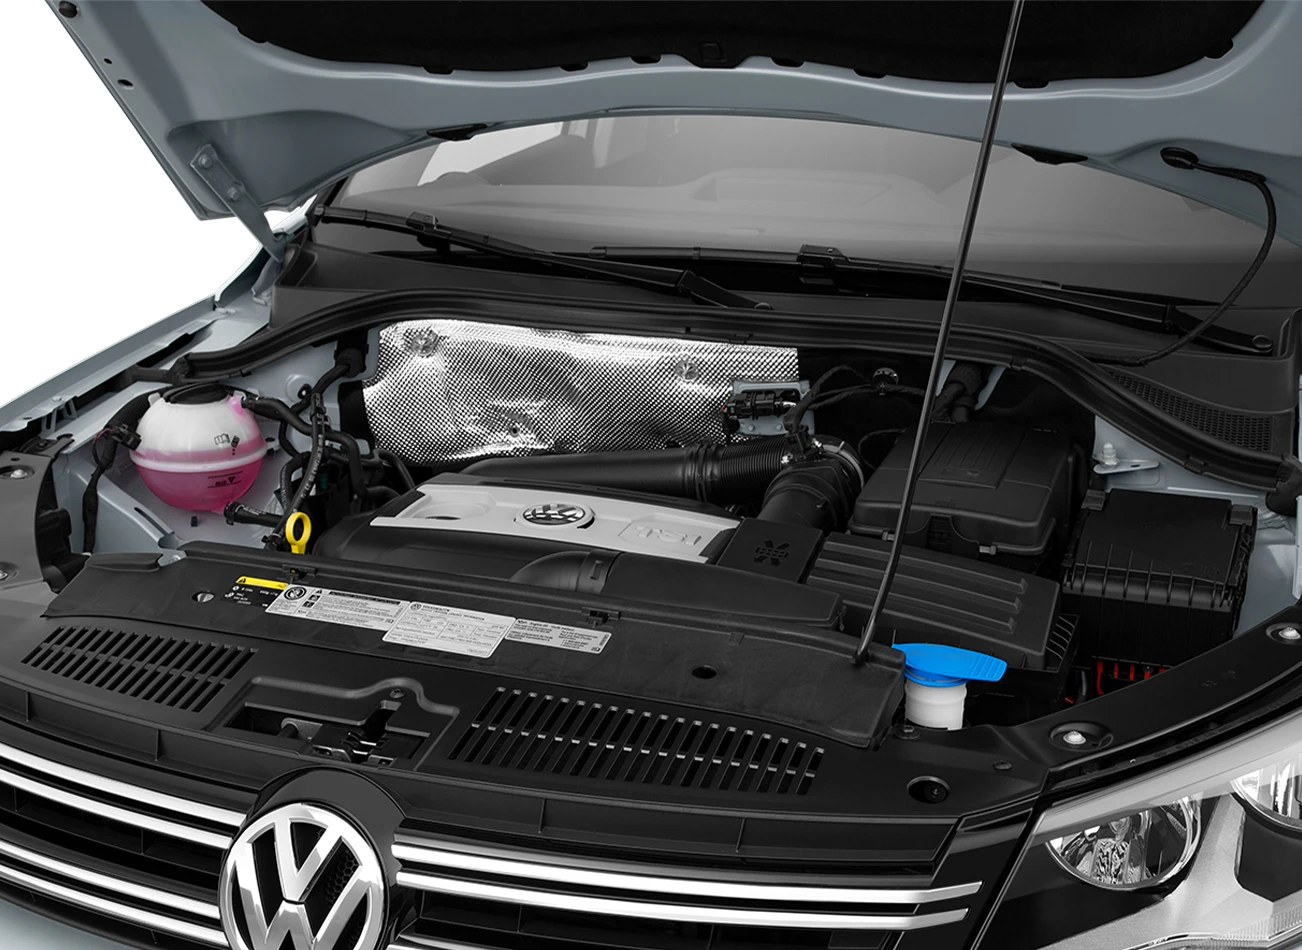 2015 Volkswagen Tiguan: Reviews, Photos, and More: Reasons to Buy #3 | CarMax